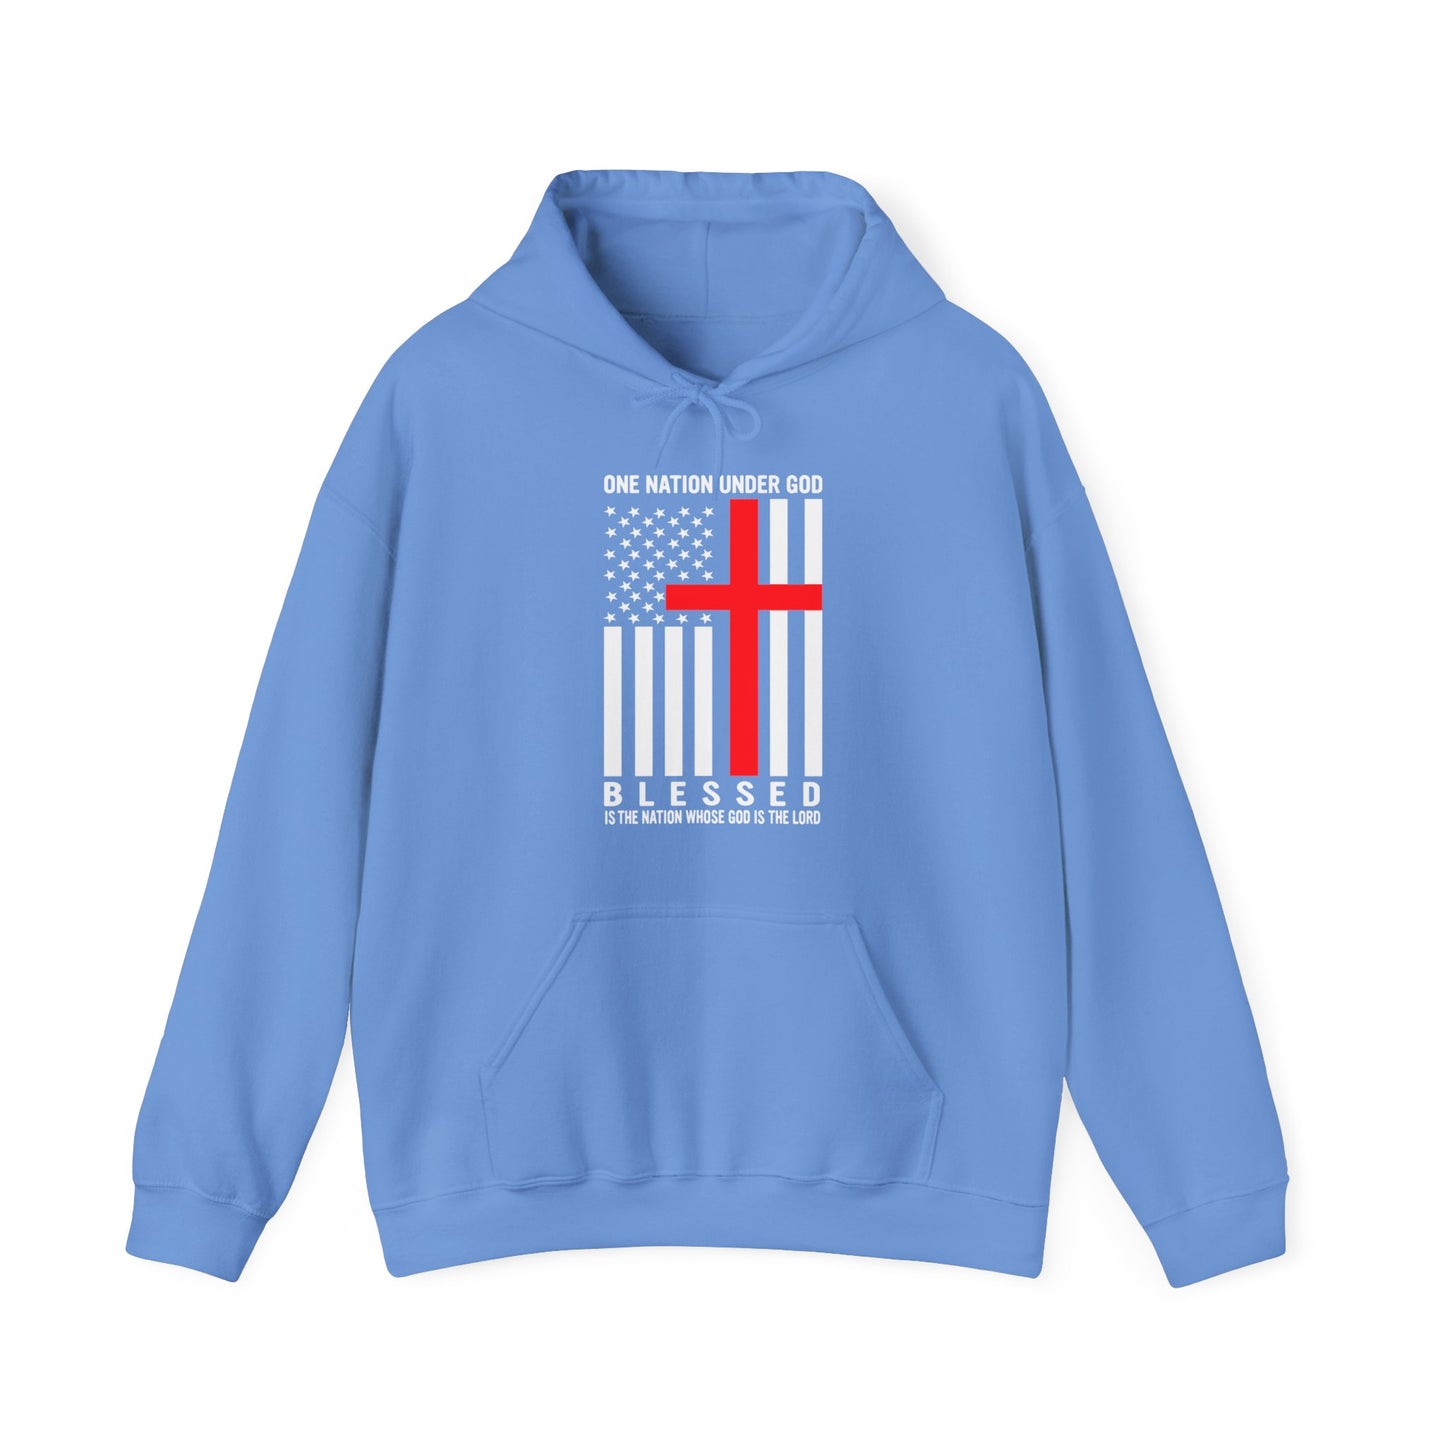 One Nation Under GOD - Printed Both Sides Unisex Heavy Blend Hooded Sweatshirt